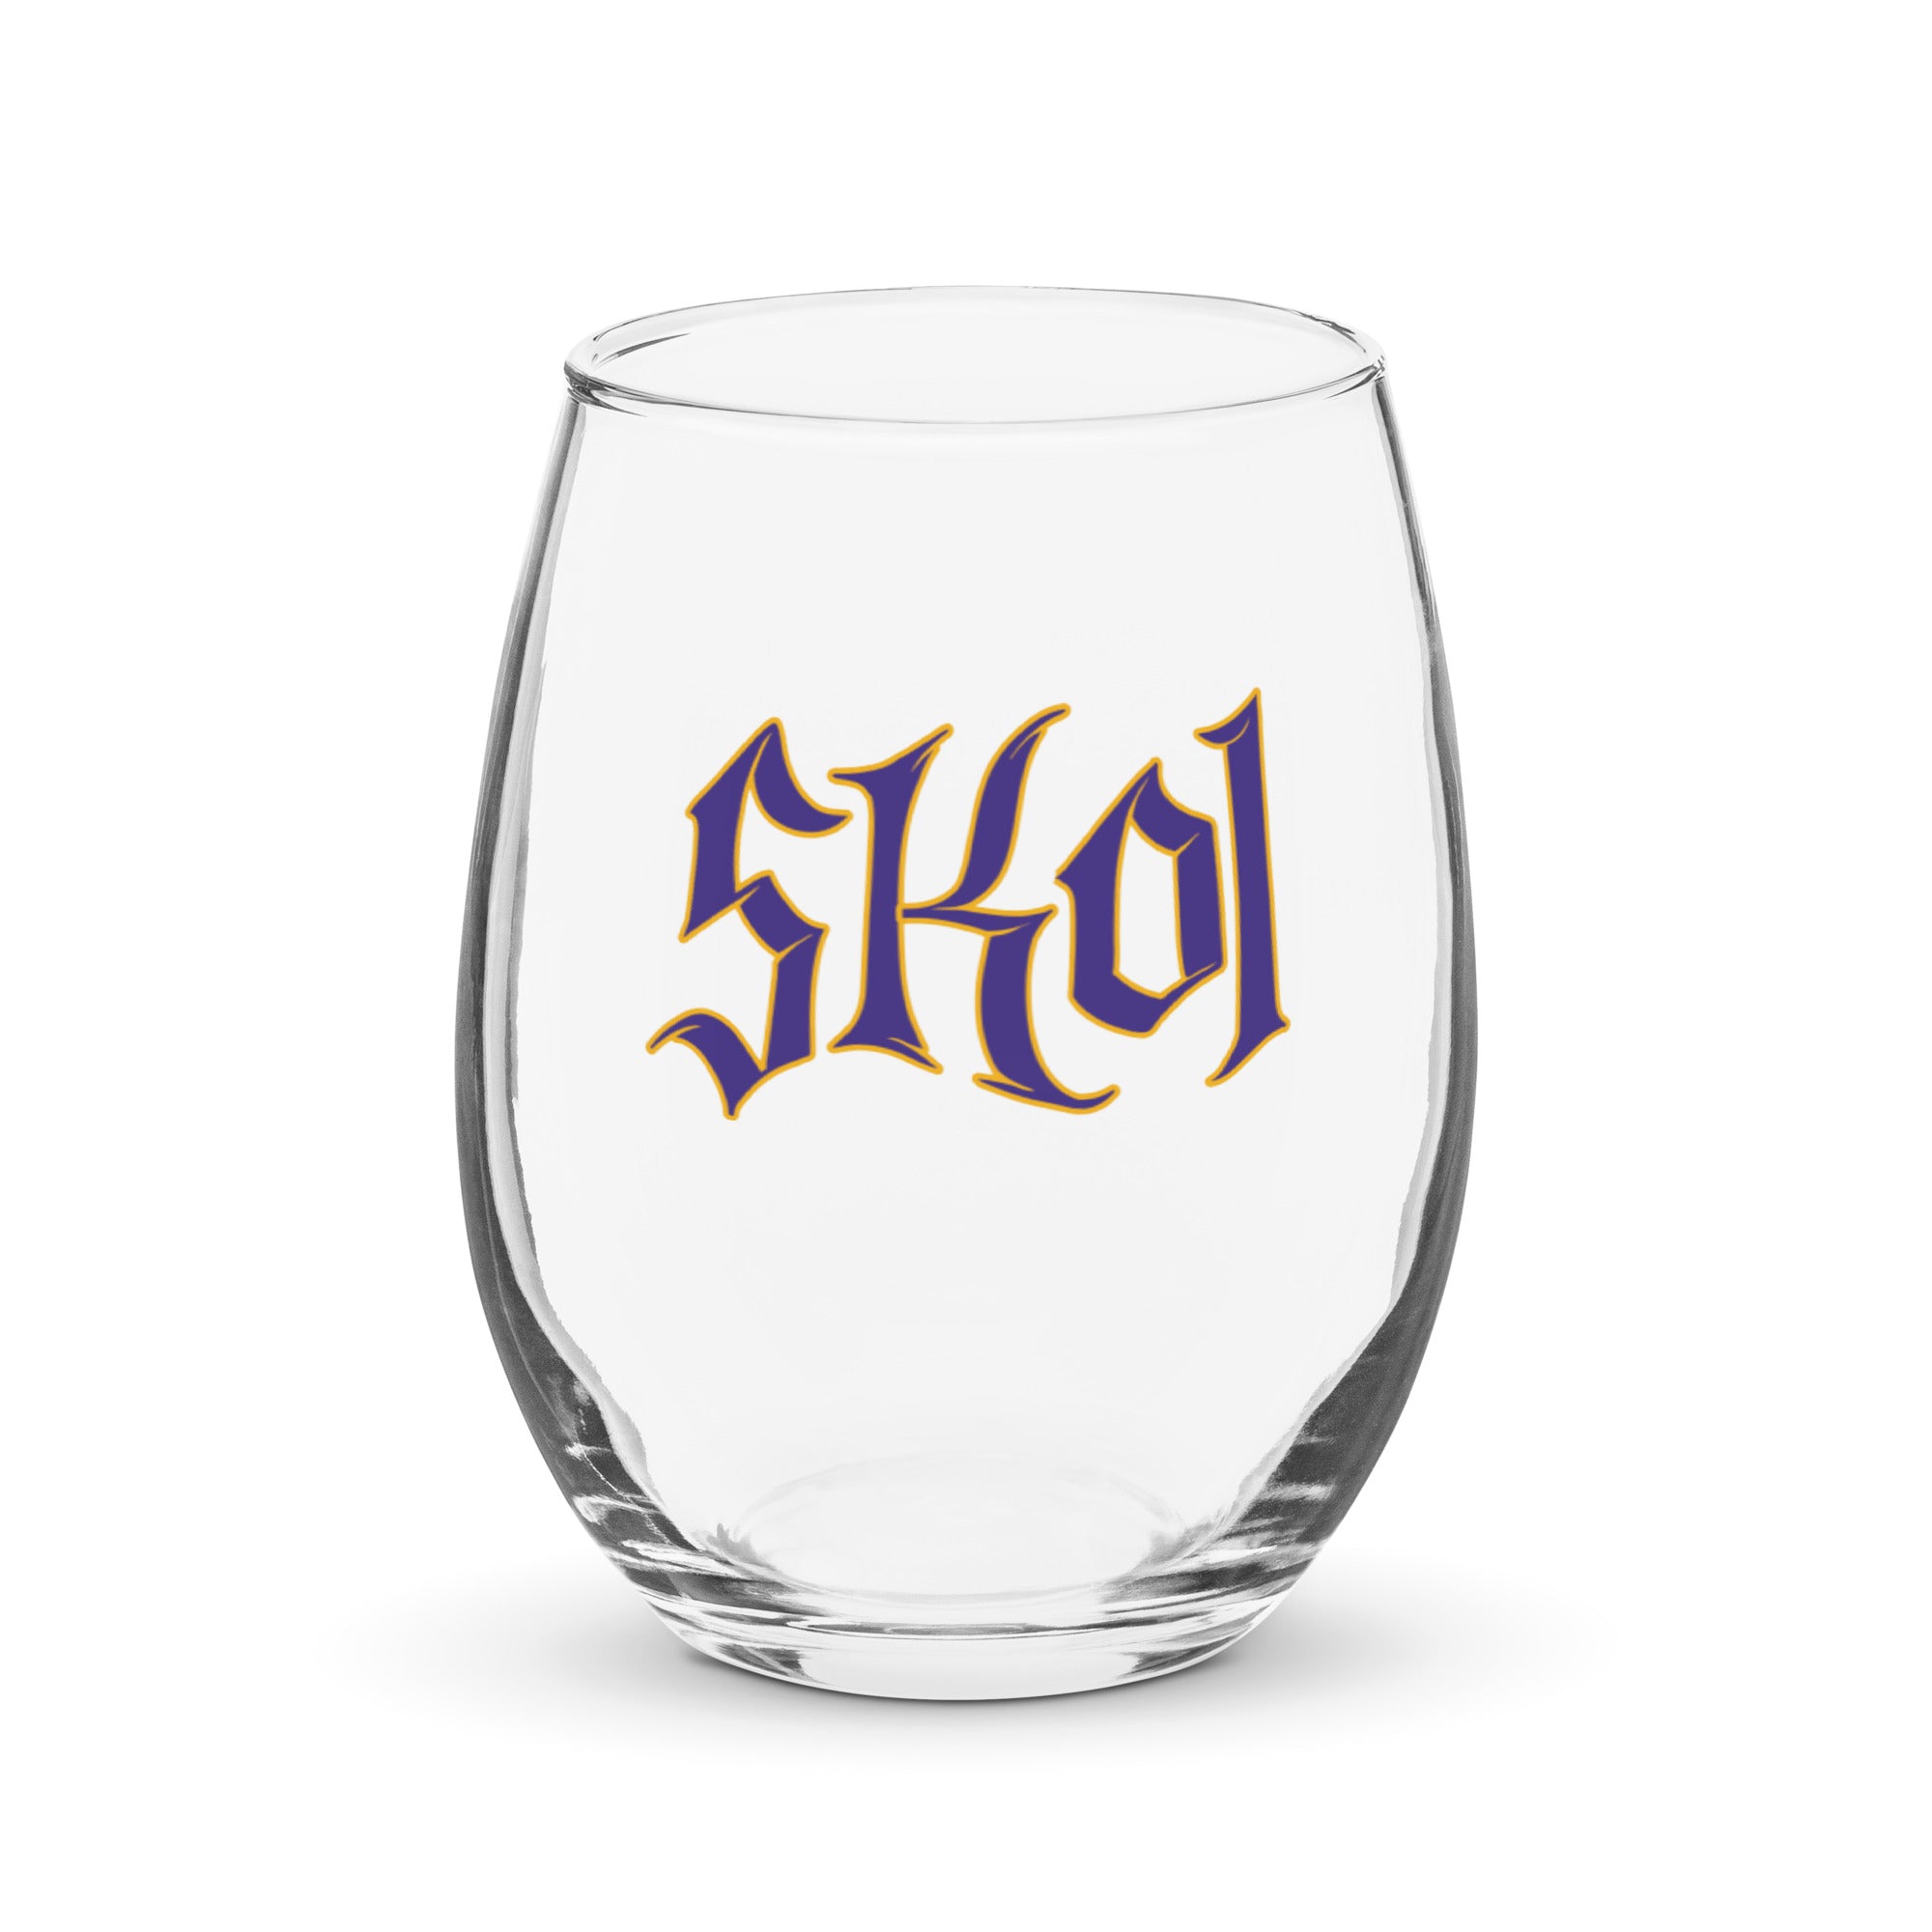 Skol Stemless wine glass